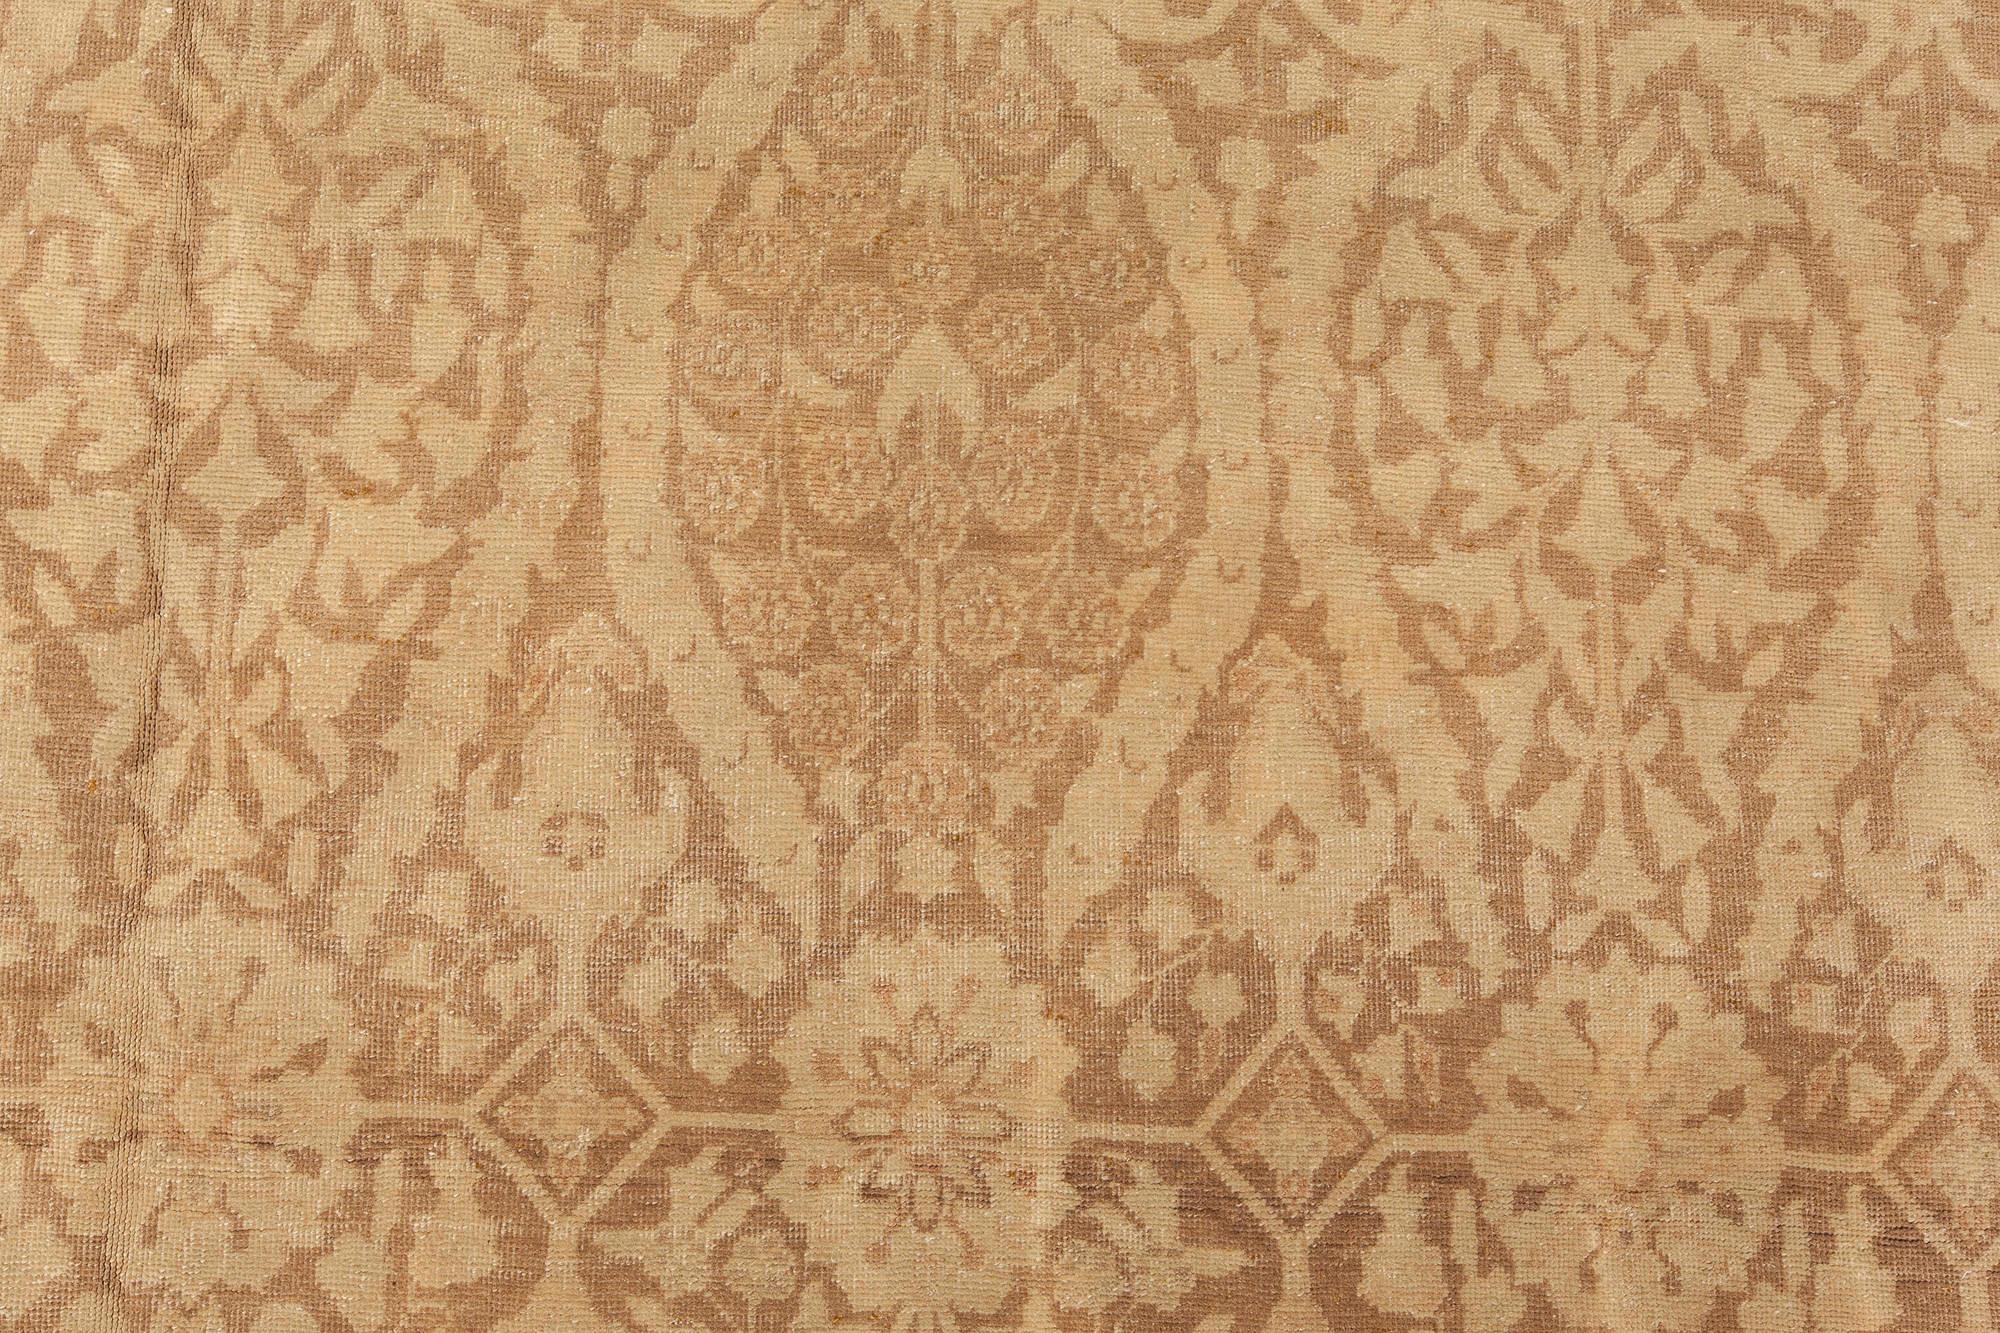 Contemporary traditional oriental inspired handmade wool rug by Doris Leslie Blau.
Size: 8'8